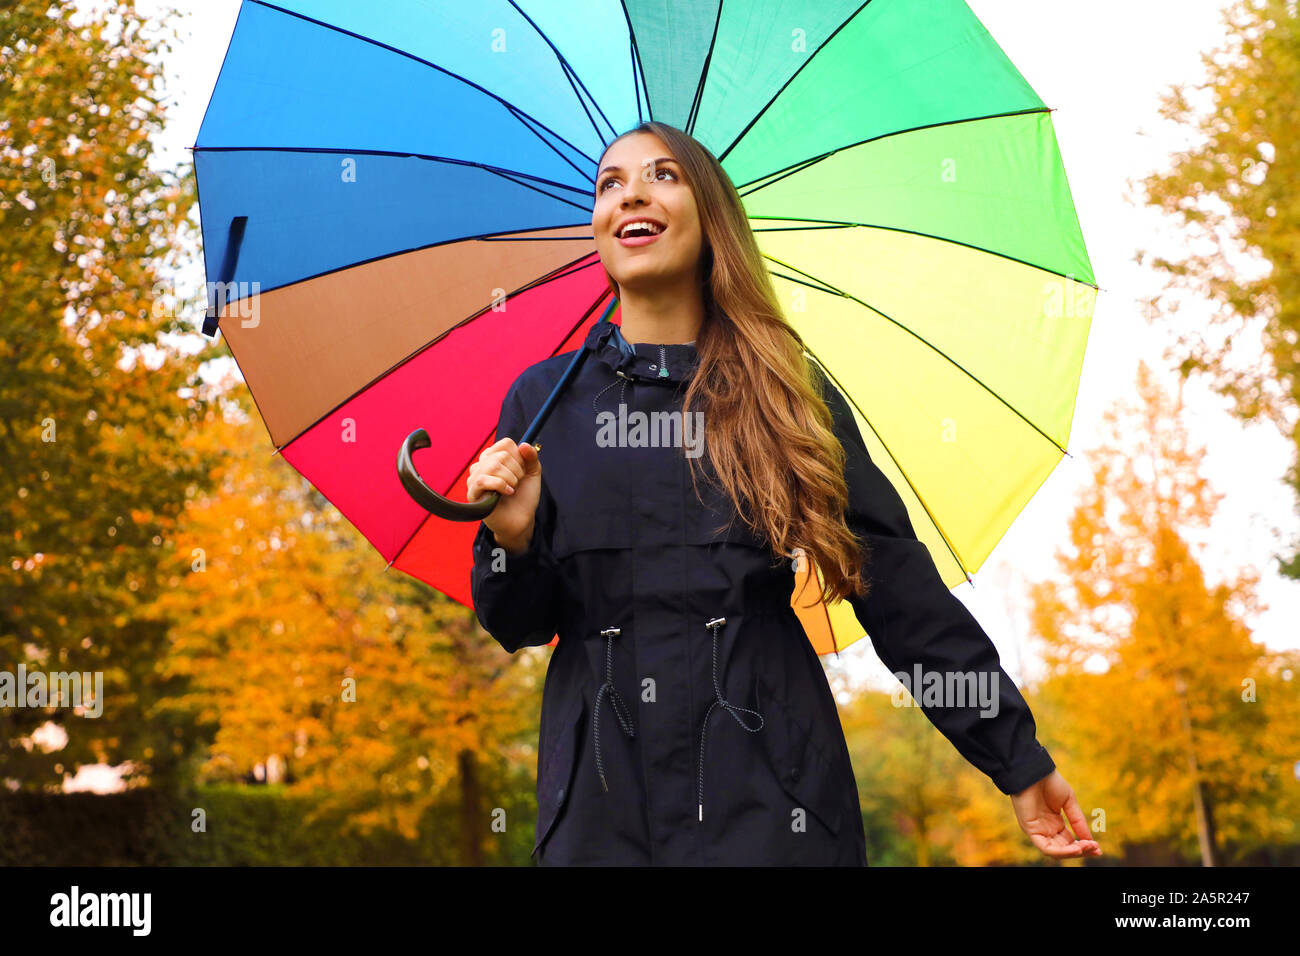 Happy girl under rainbow umbrella. Autumn woman walking in forest park enjoying outdoor with rainbow umbrella. Stock Photo